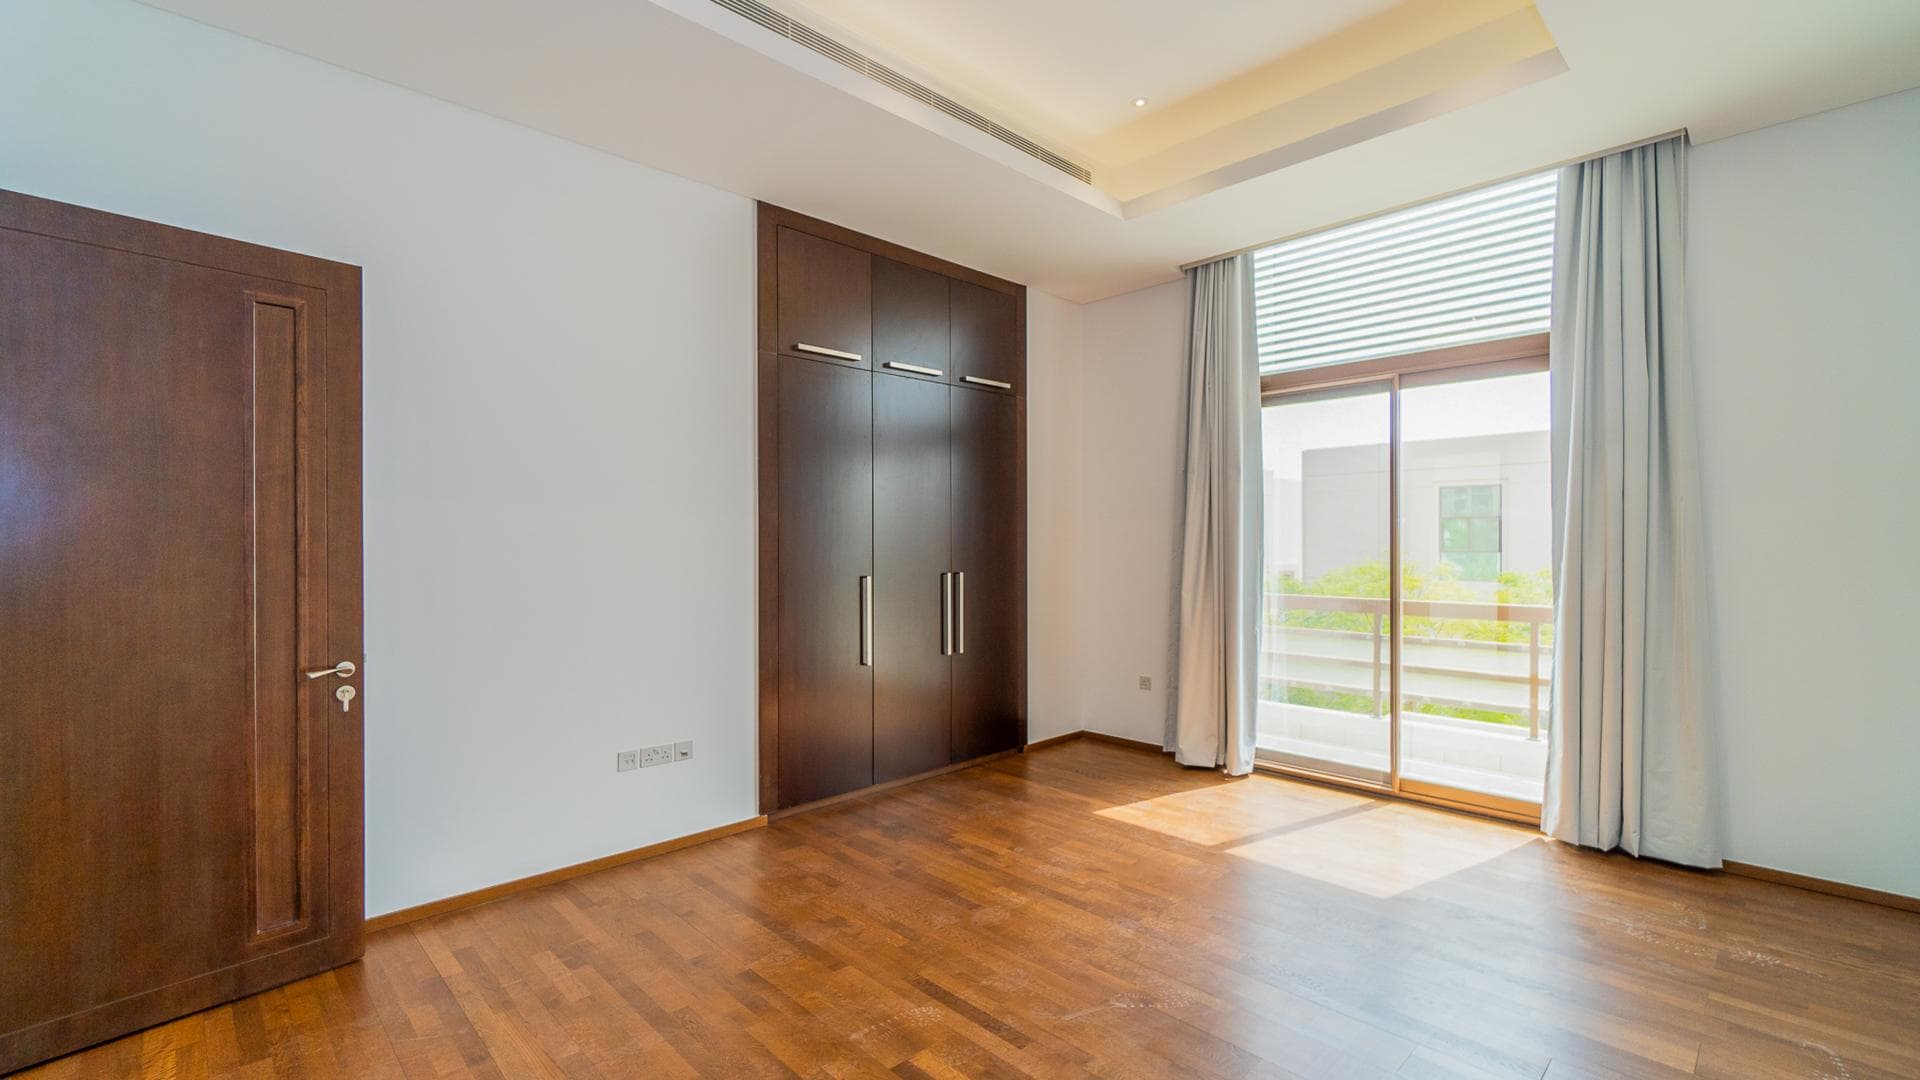 5 Bedroom Villa For Rent Meydan Gated Community Lp13586 788fbdf74d31d40.jpg